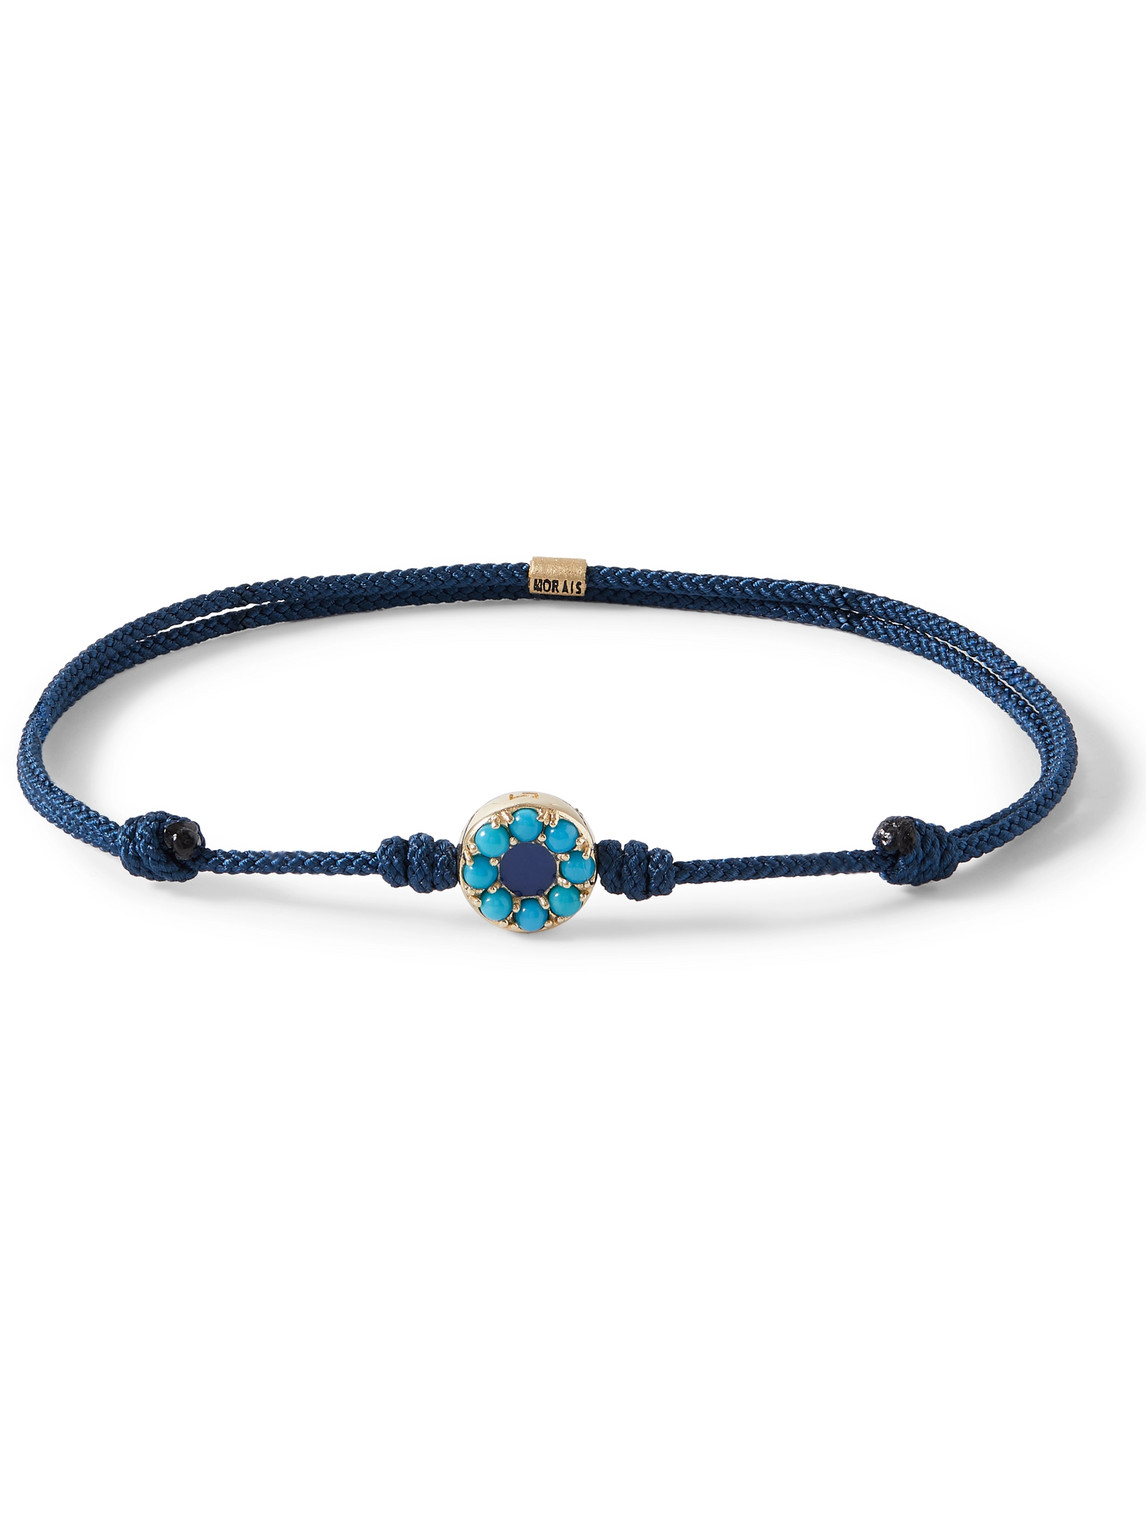 Luis Morais Gold, Turquoise, Enamel And Cord Bracelet In Blue